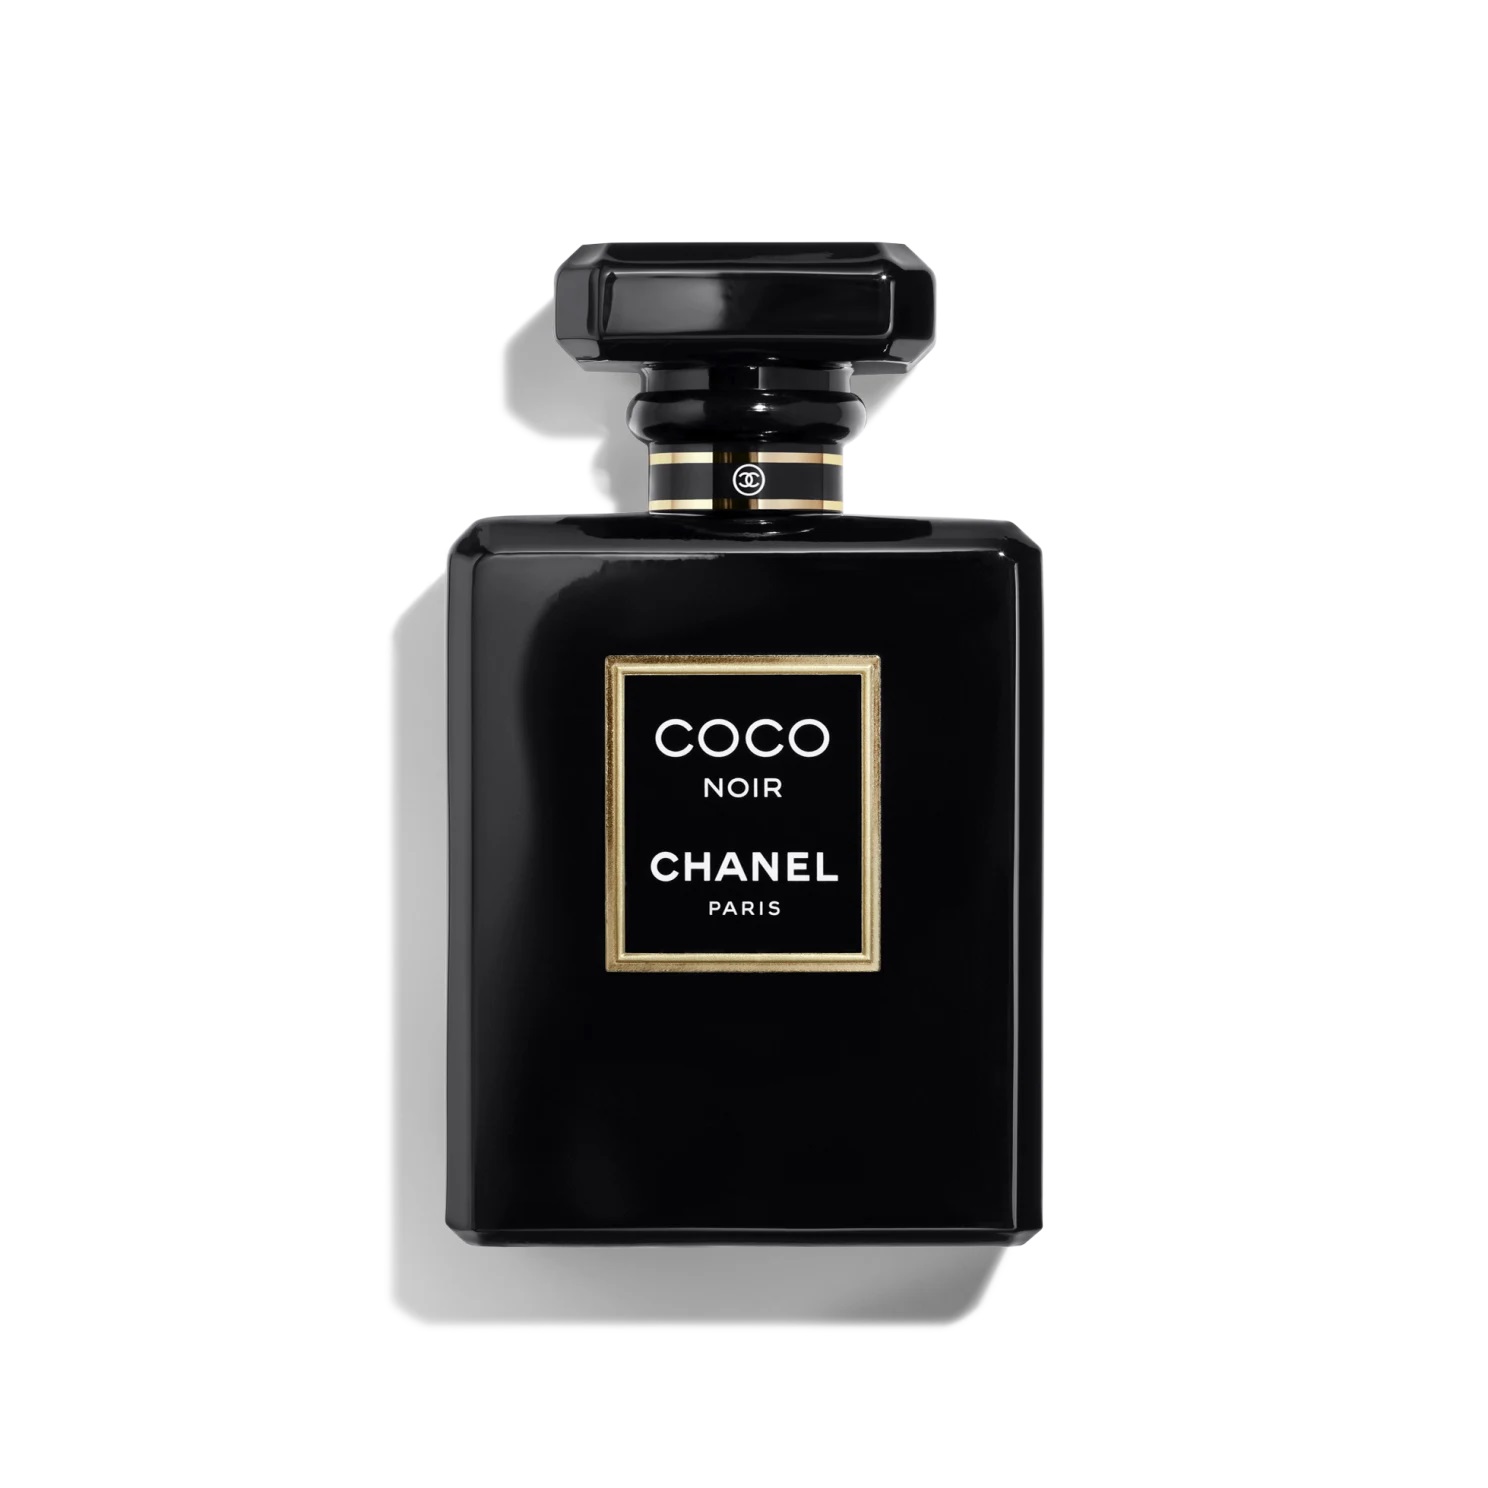 Chanel COCO NOIR EAU DE PARFUM SPRAY 100 ml